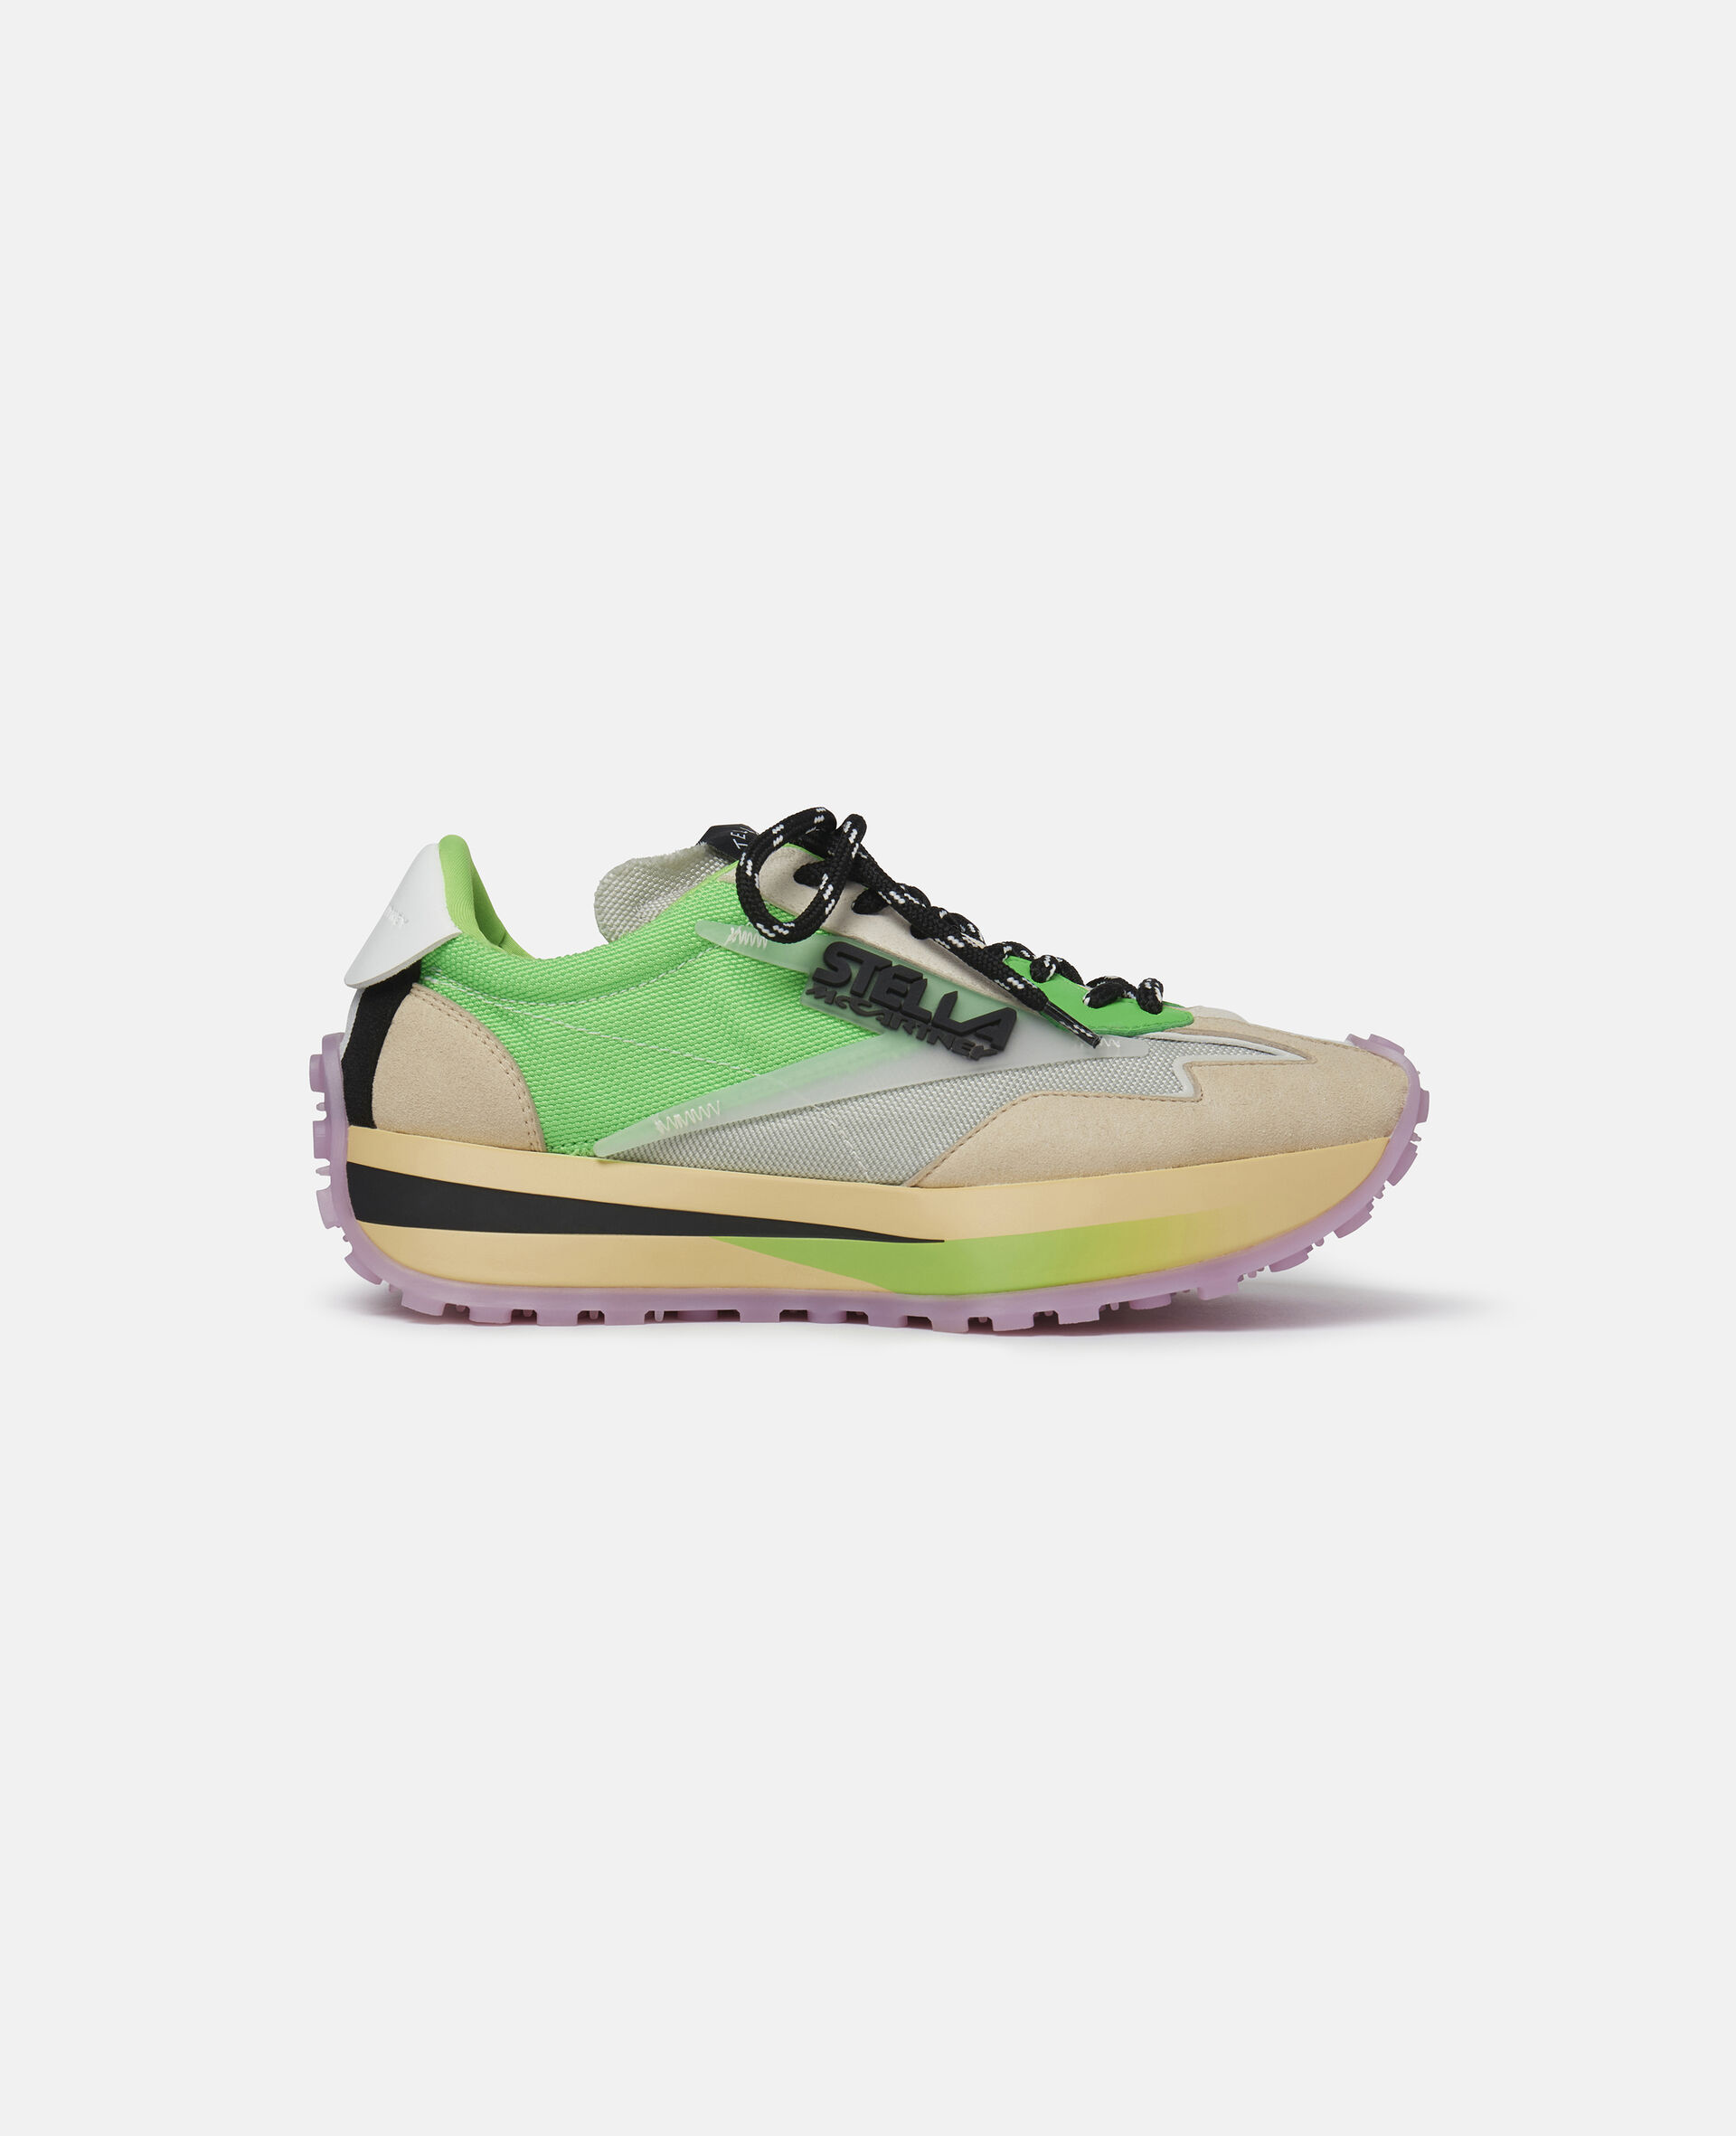 Reclypse Sneakers-Green-large image number 0